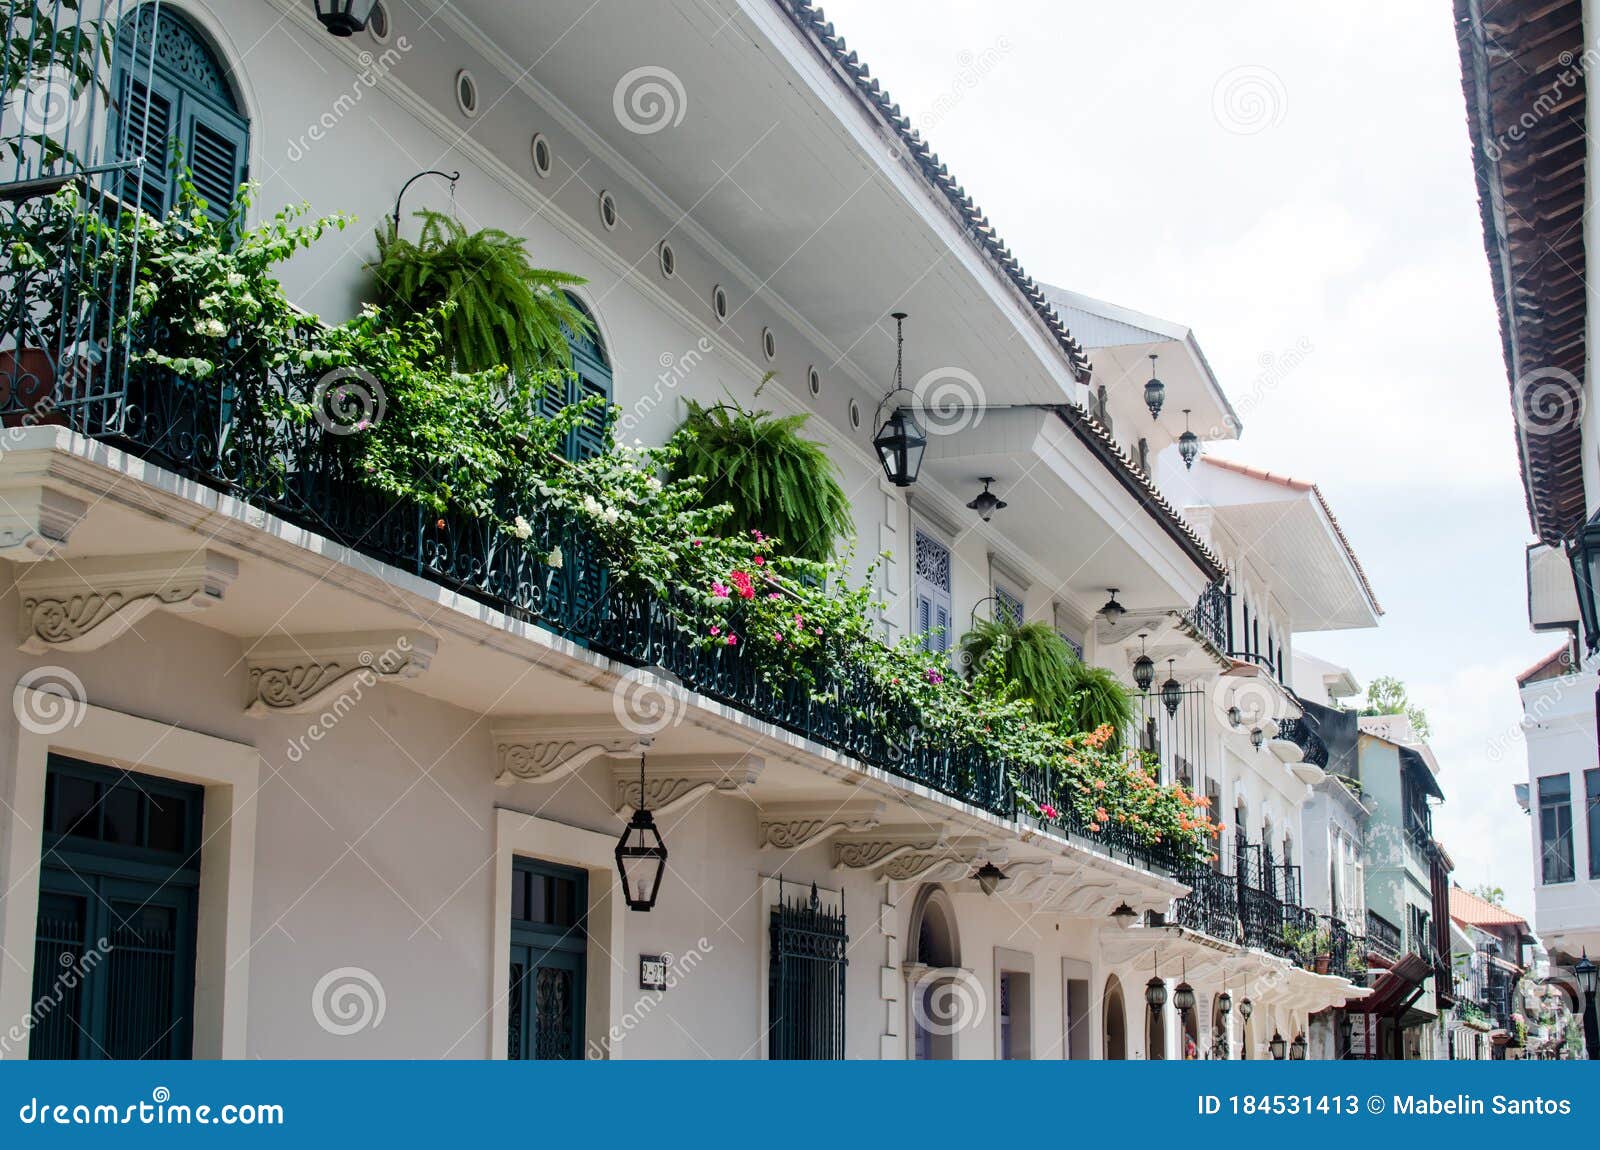 perspective view of the casco antiguo neighborhood in panama city